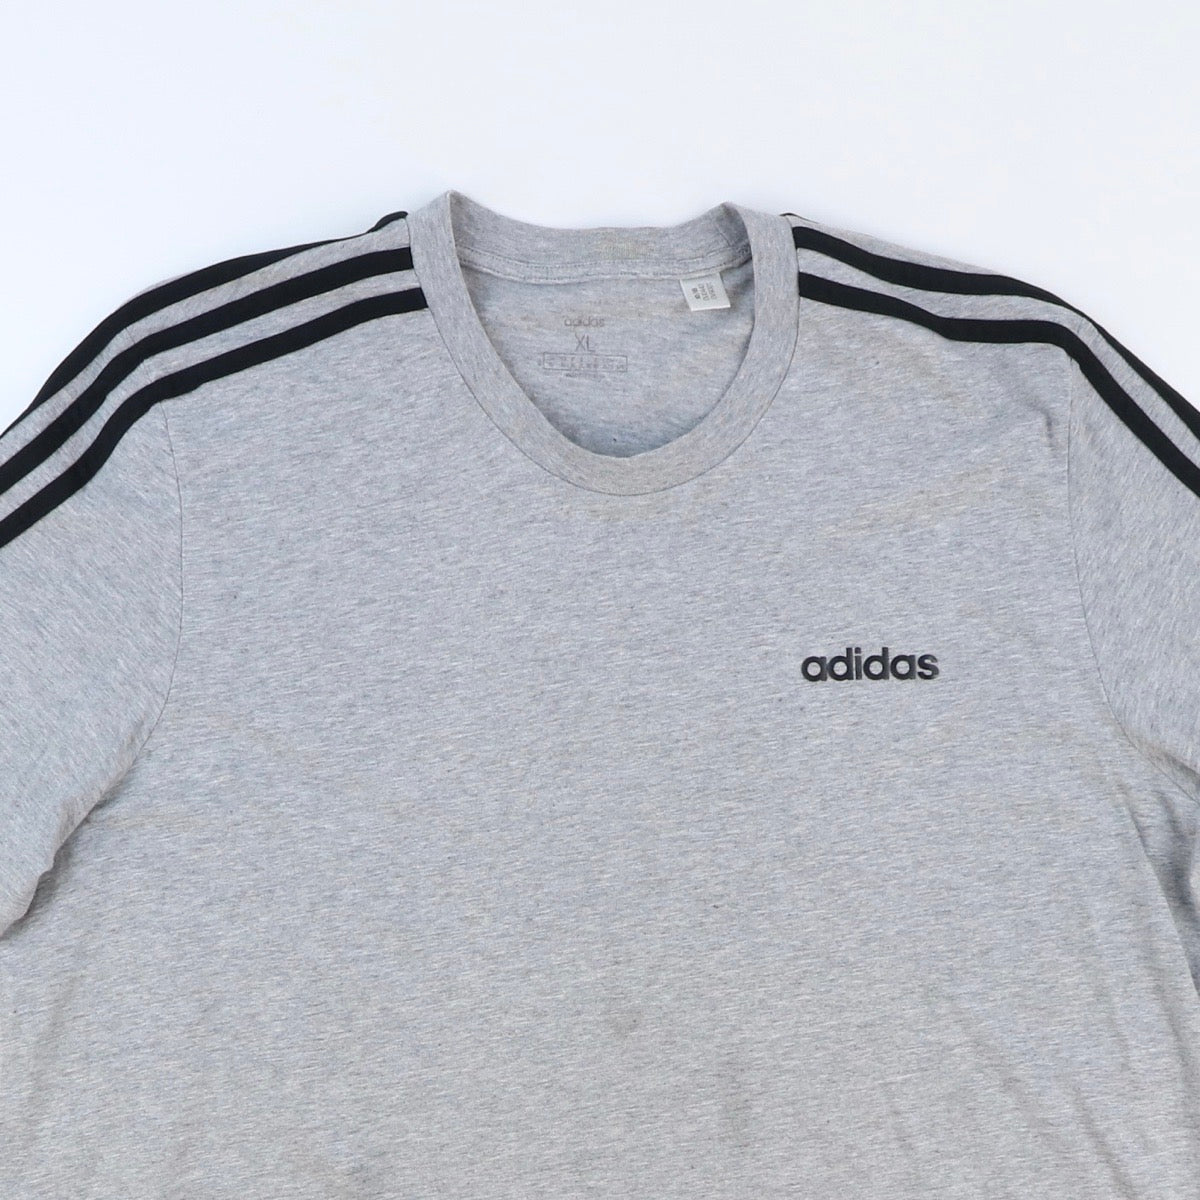 Adidas T shirt (XL)